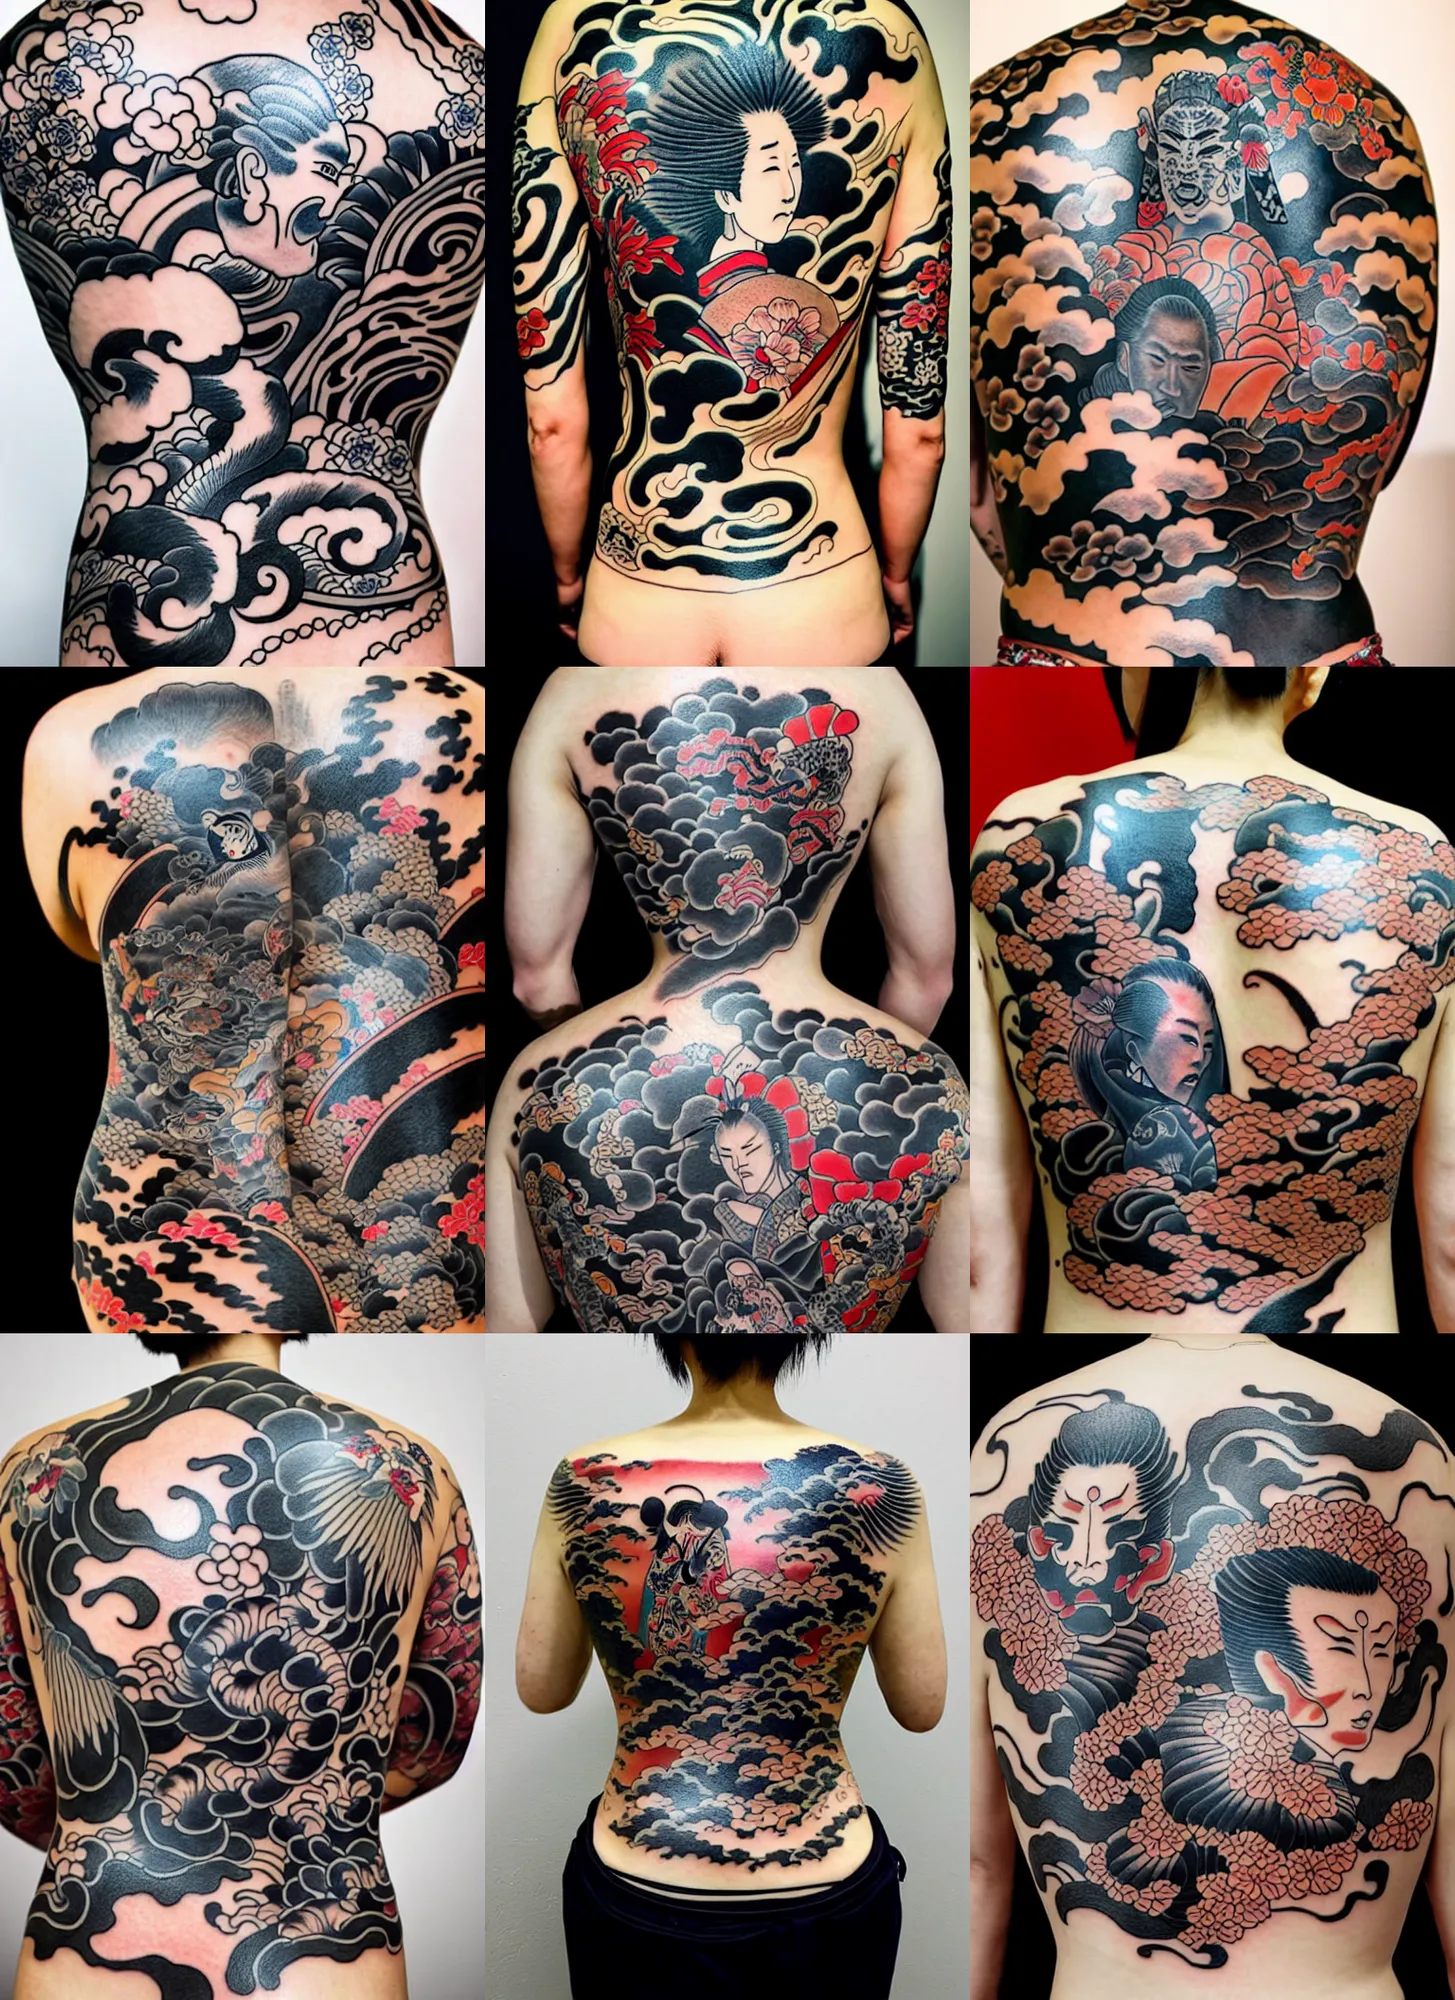 yakuza back tattoo. ap photo. studio lighting, even | Stable Diffusion